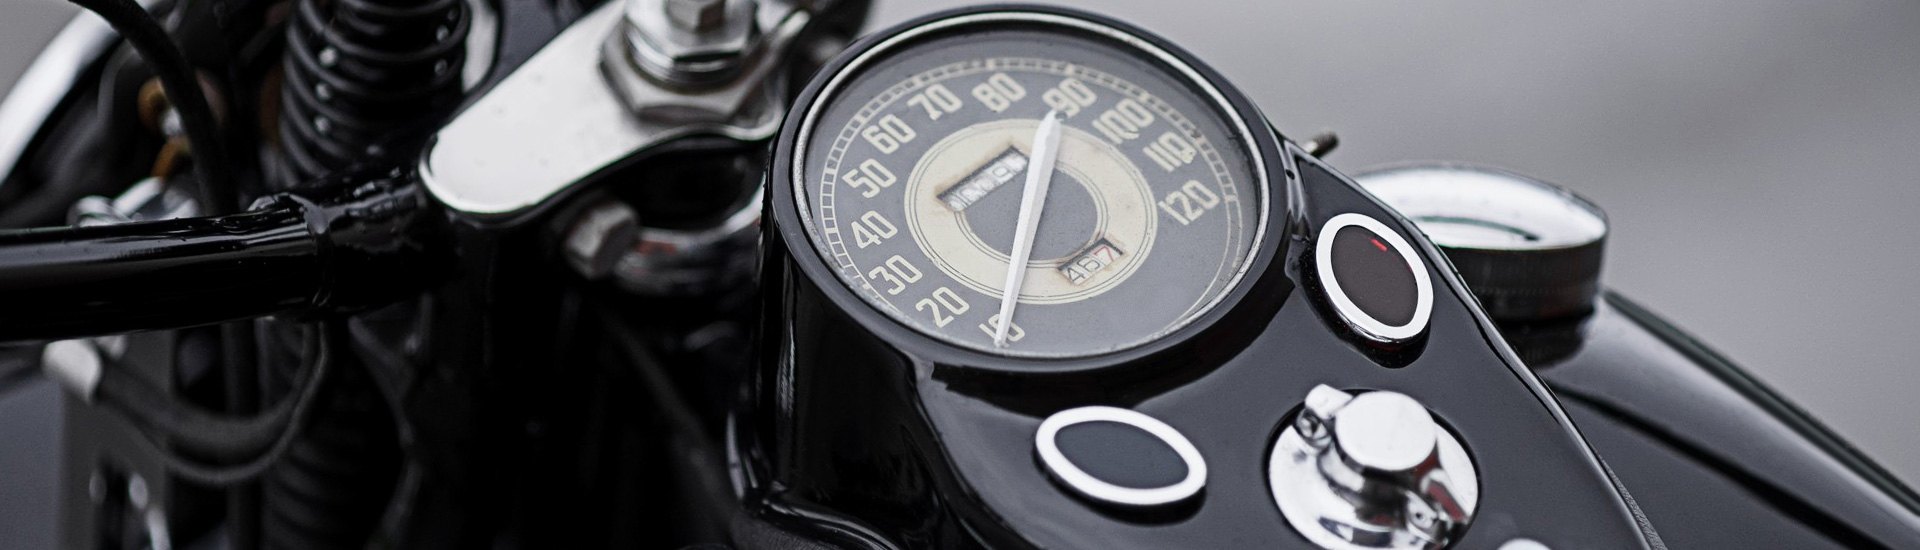 Harley Davidson Breakout Speedometer Flip Youtube